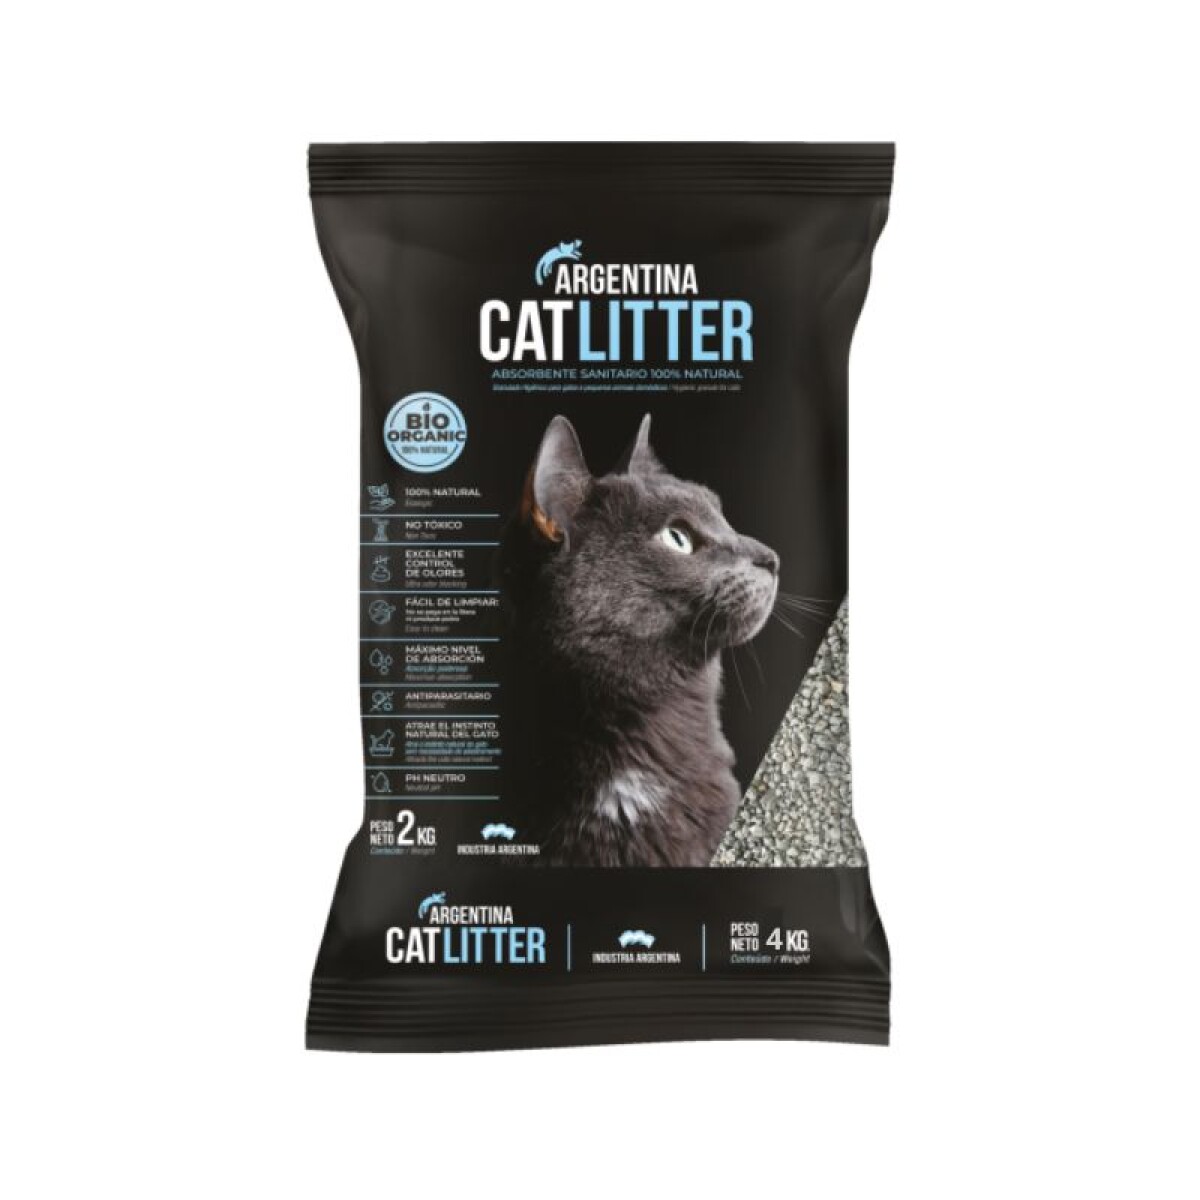 ARGENTINA CAT LITTER X 4 KG - Argentina Cat Litter X 4 Kg 